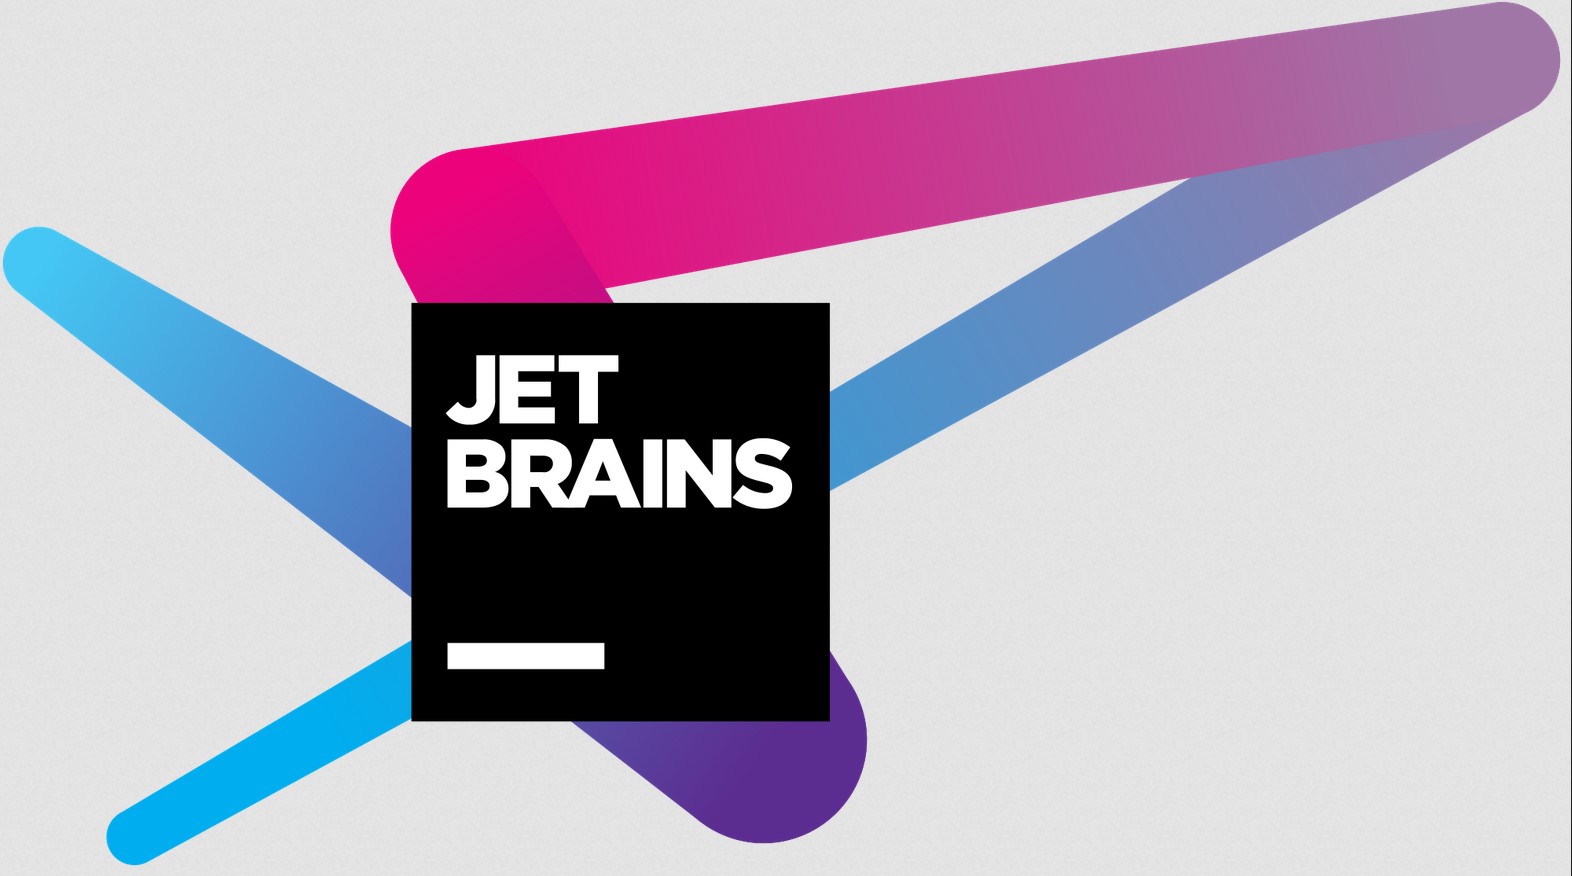 Jetbrains 1 Year Subscription, Professional desktop IDEs: IntelliJ IDEA, PyCharm, and more.